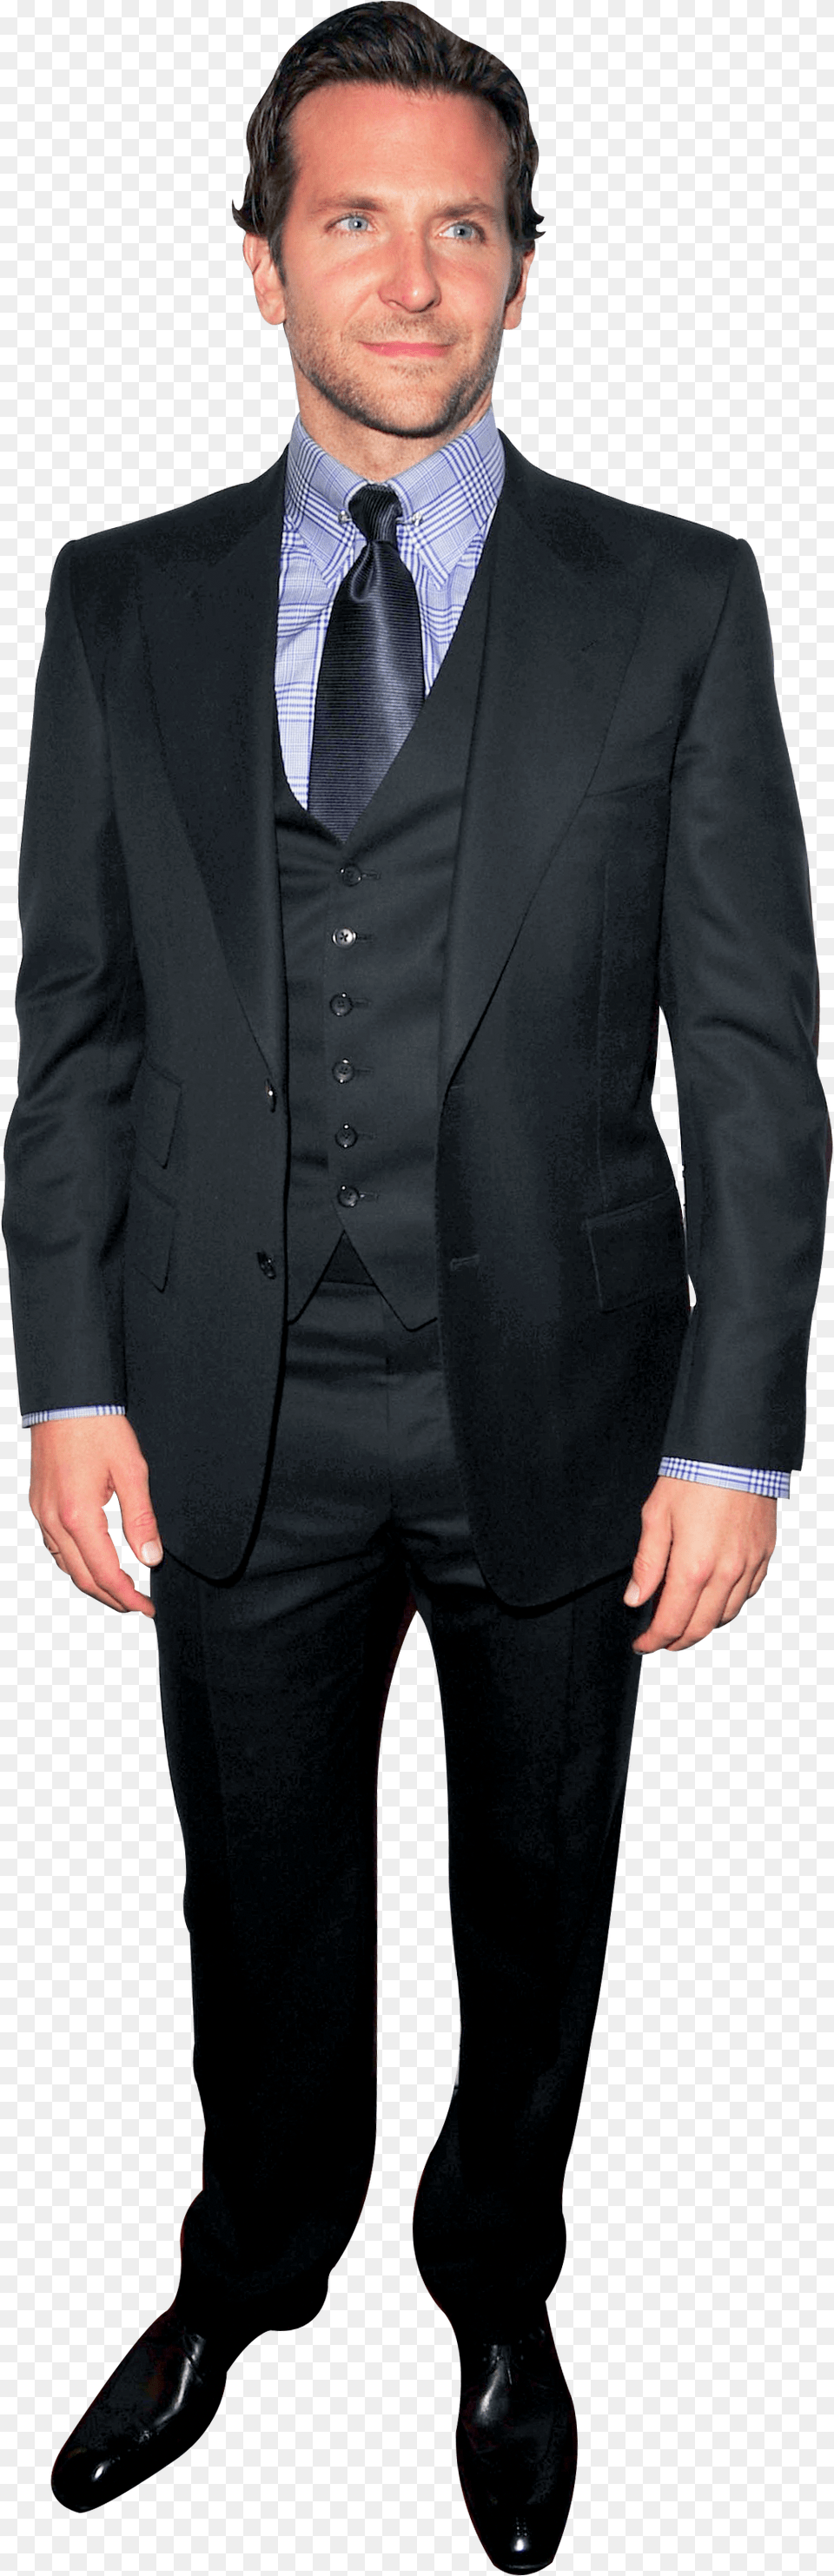 Tuxedo, Accessories, Tie, Suit, Formal Wear Png Image